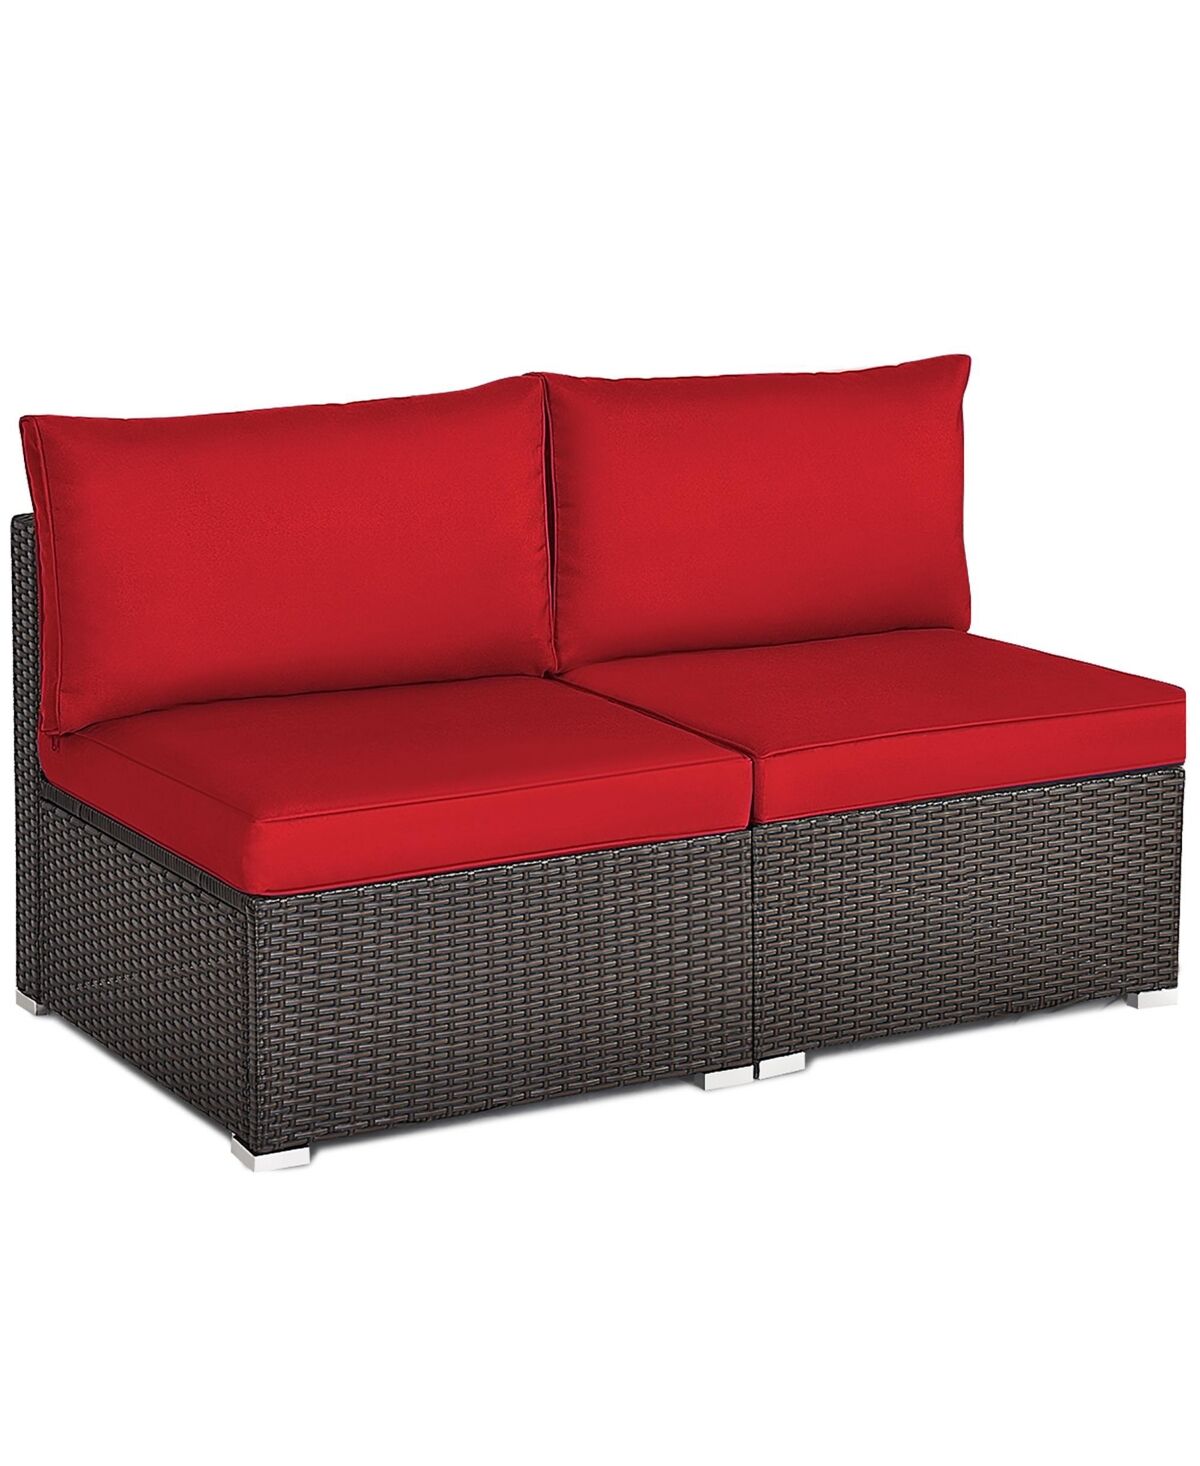 Costway 2PCS Patio Rattan Armless Sofa Sectional Conversation Furniture Set W/Cushion - Red